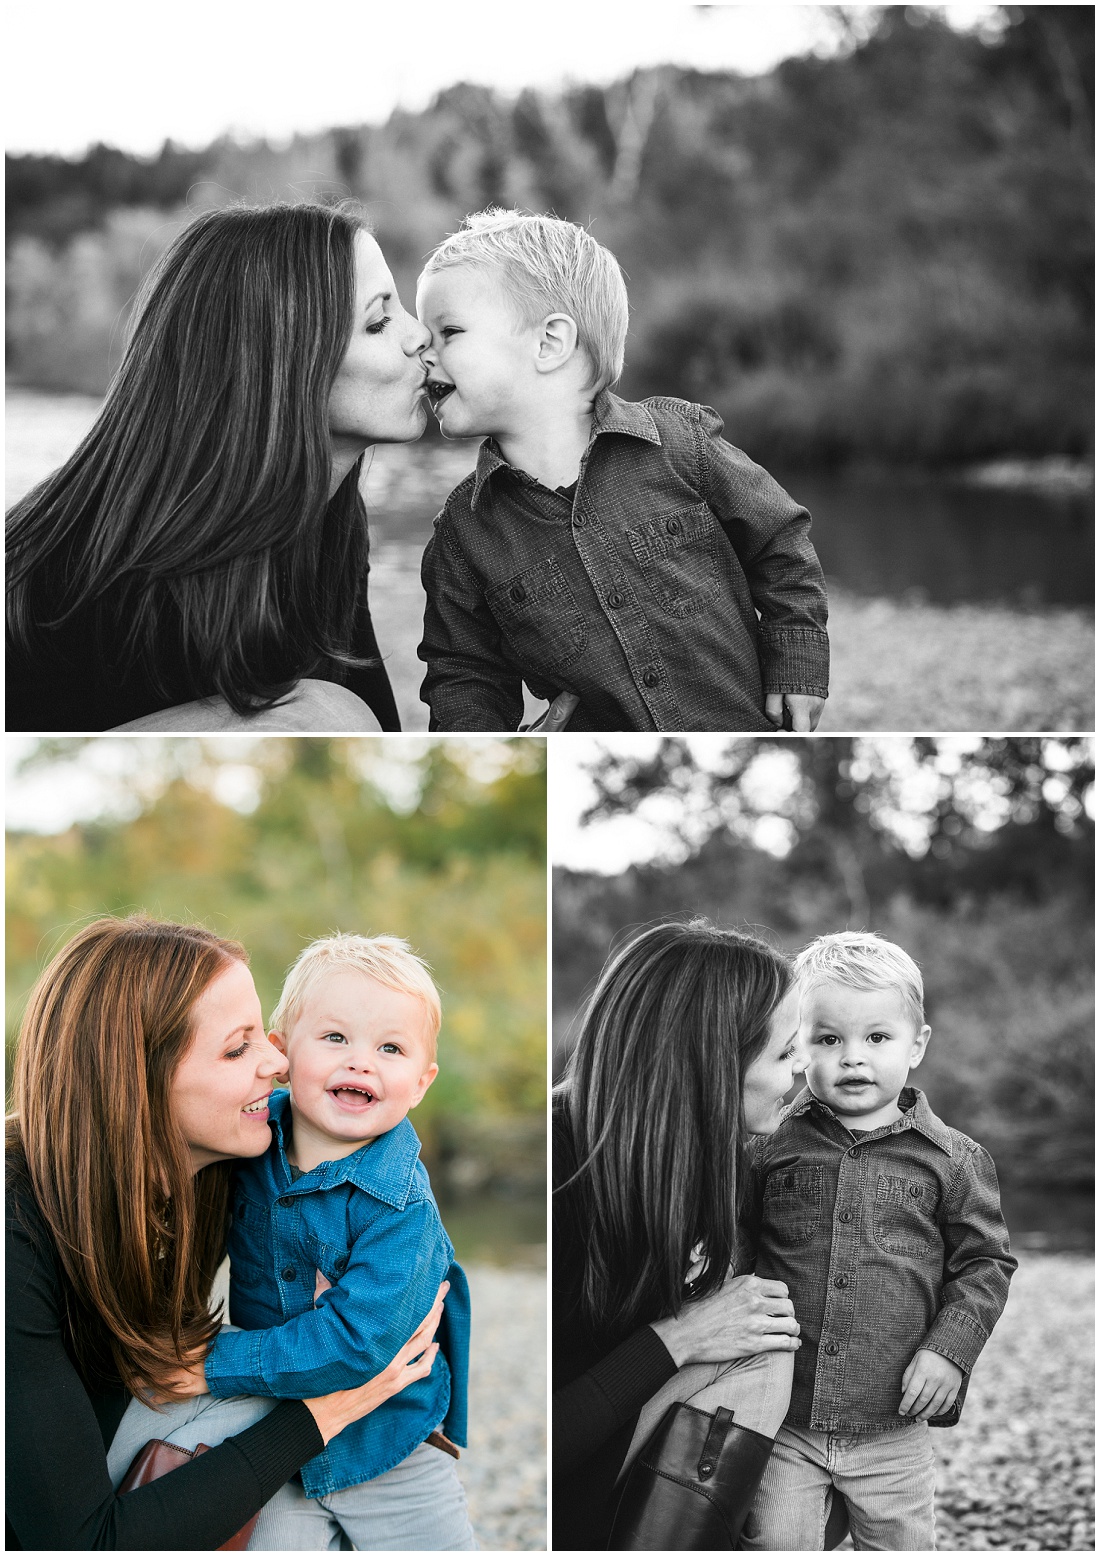 Adorable mom and son photos | Alysha Sladek Photography >>www.alyshasladek.com<<